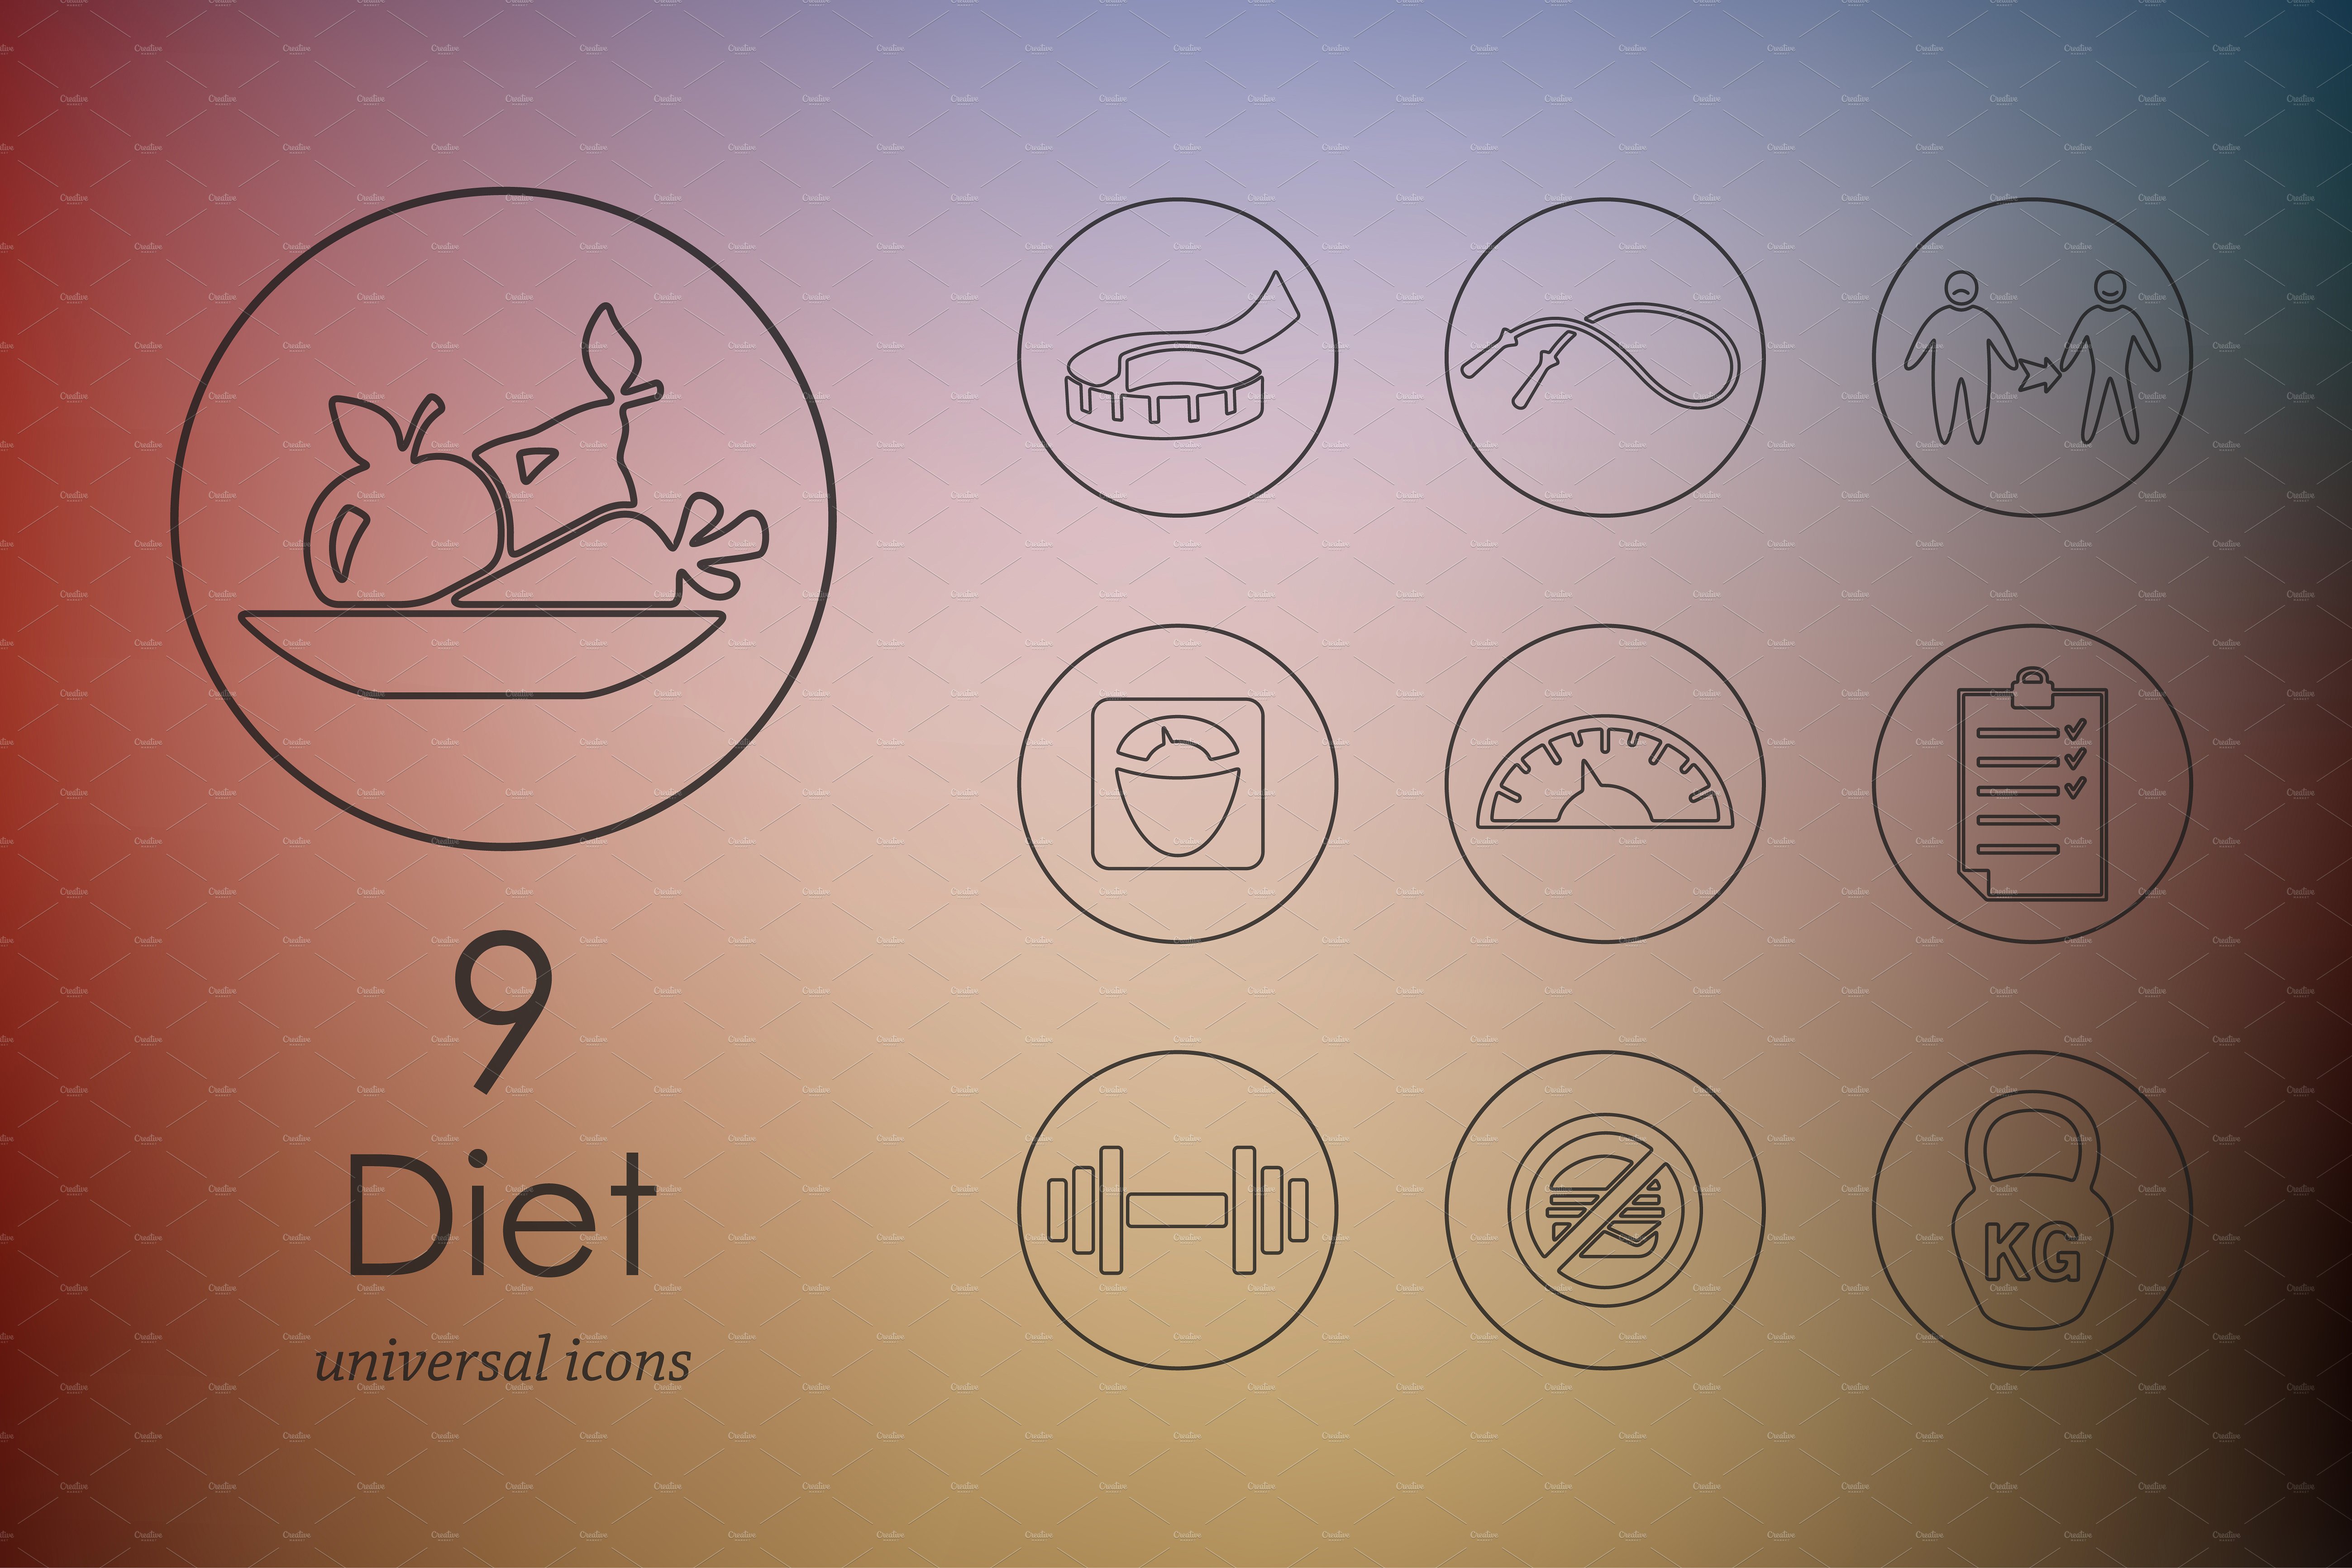 9饮食图标 9 diet icons #91172